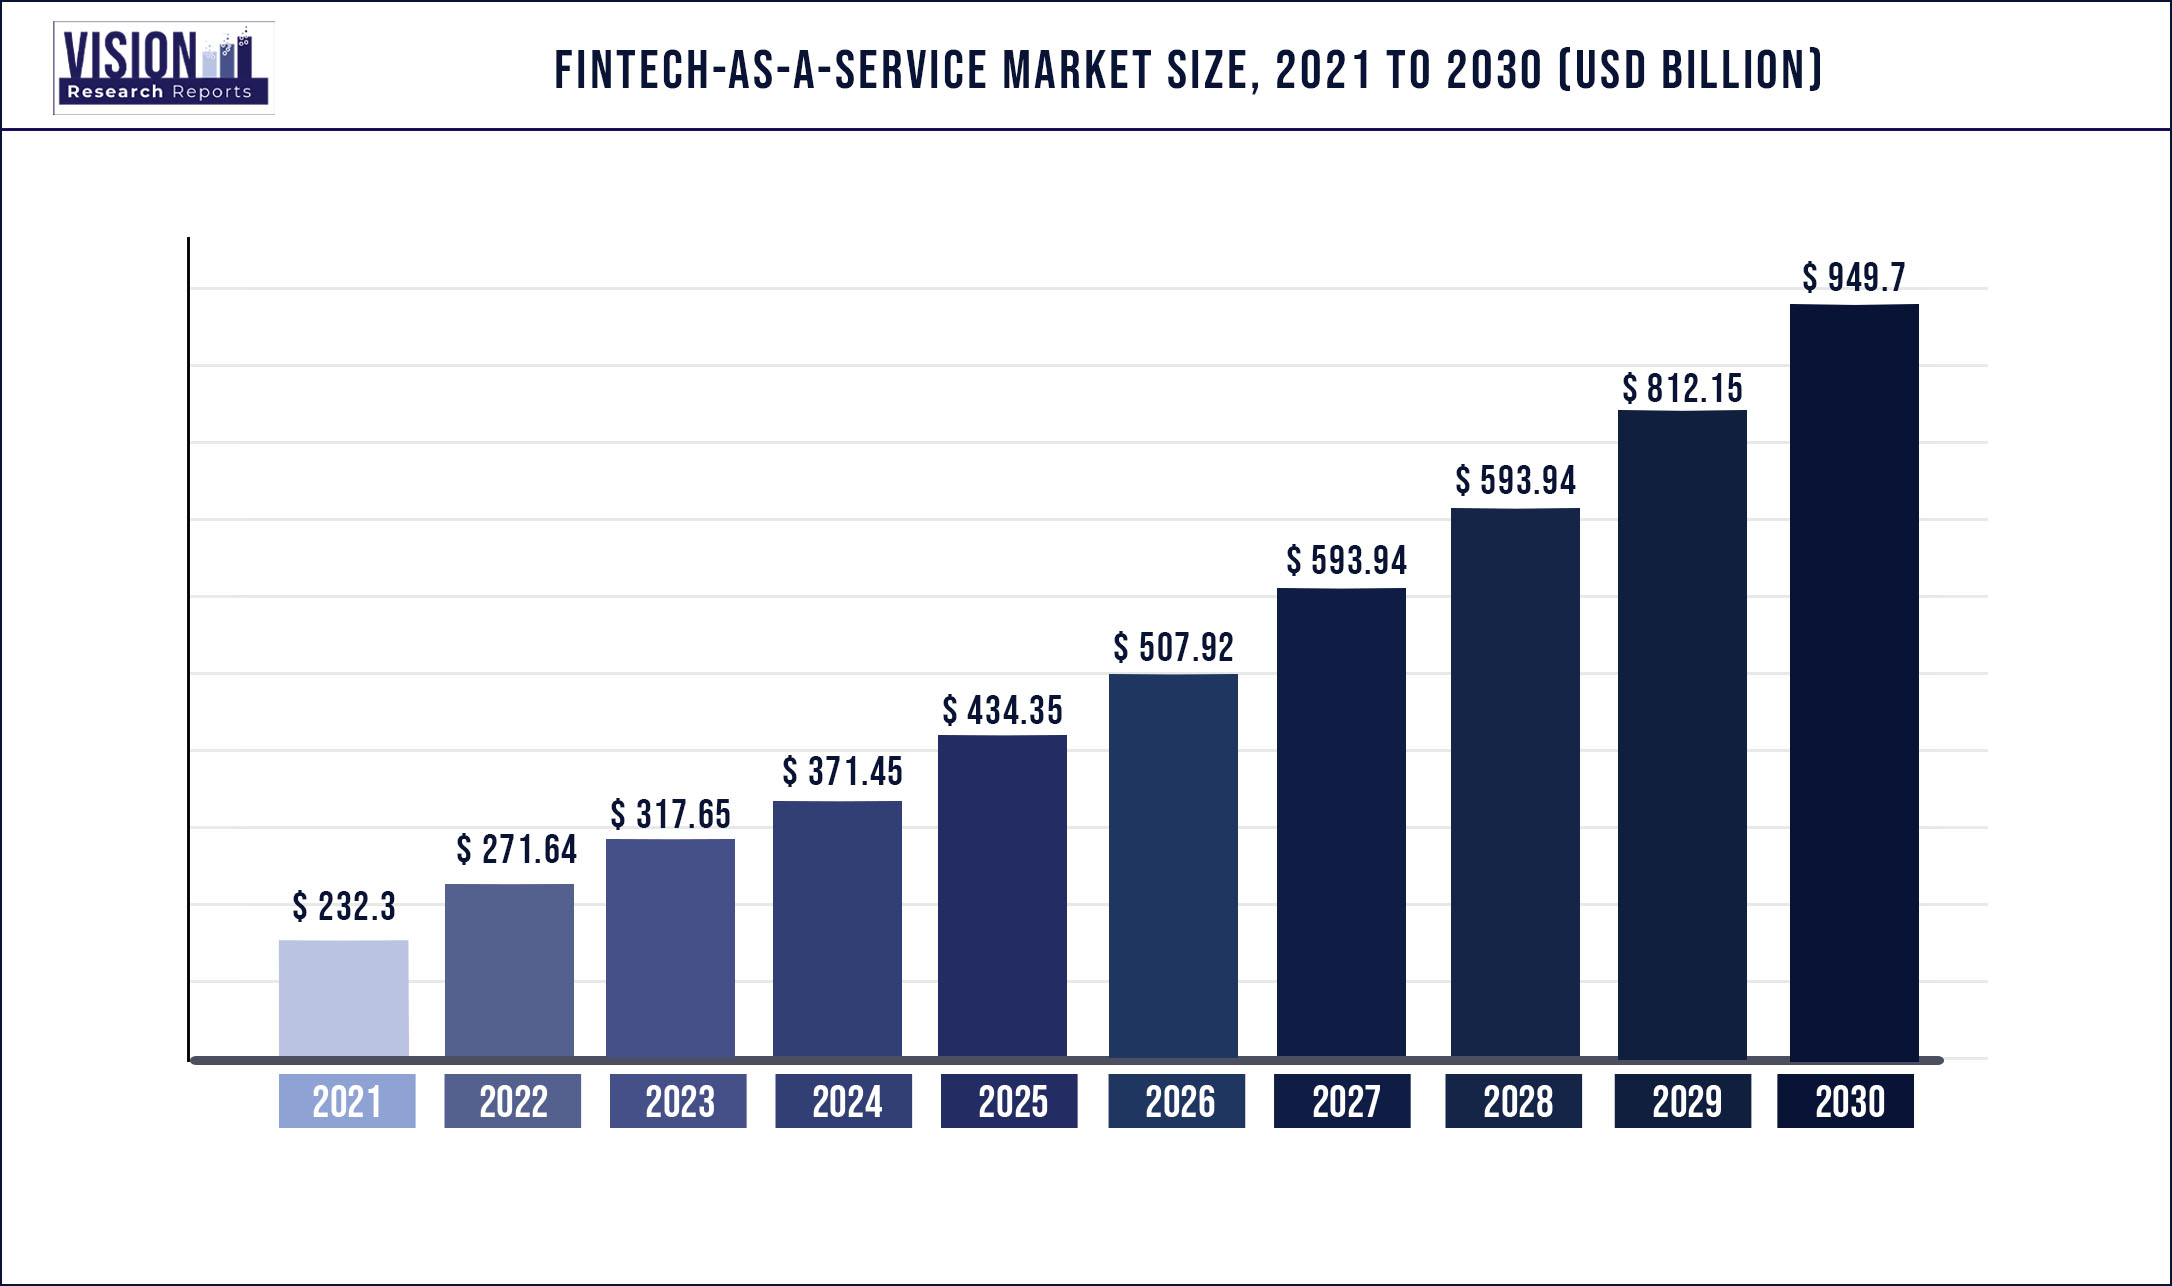 Fintech-as-a-Service Market Size 2021 to 2030